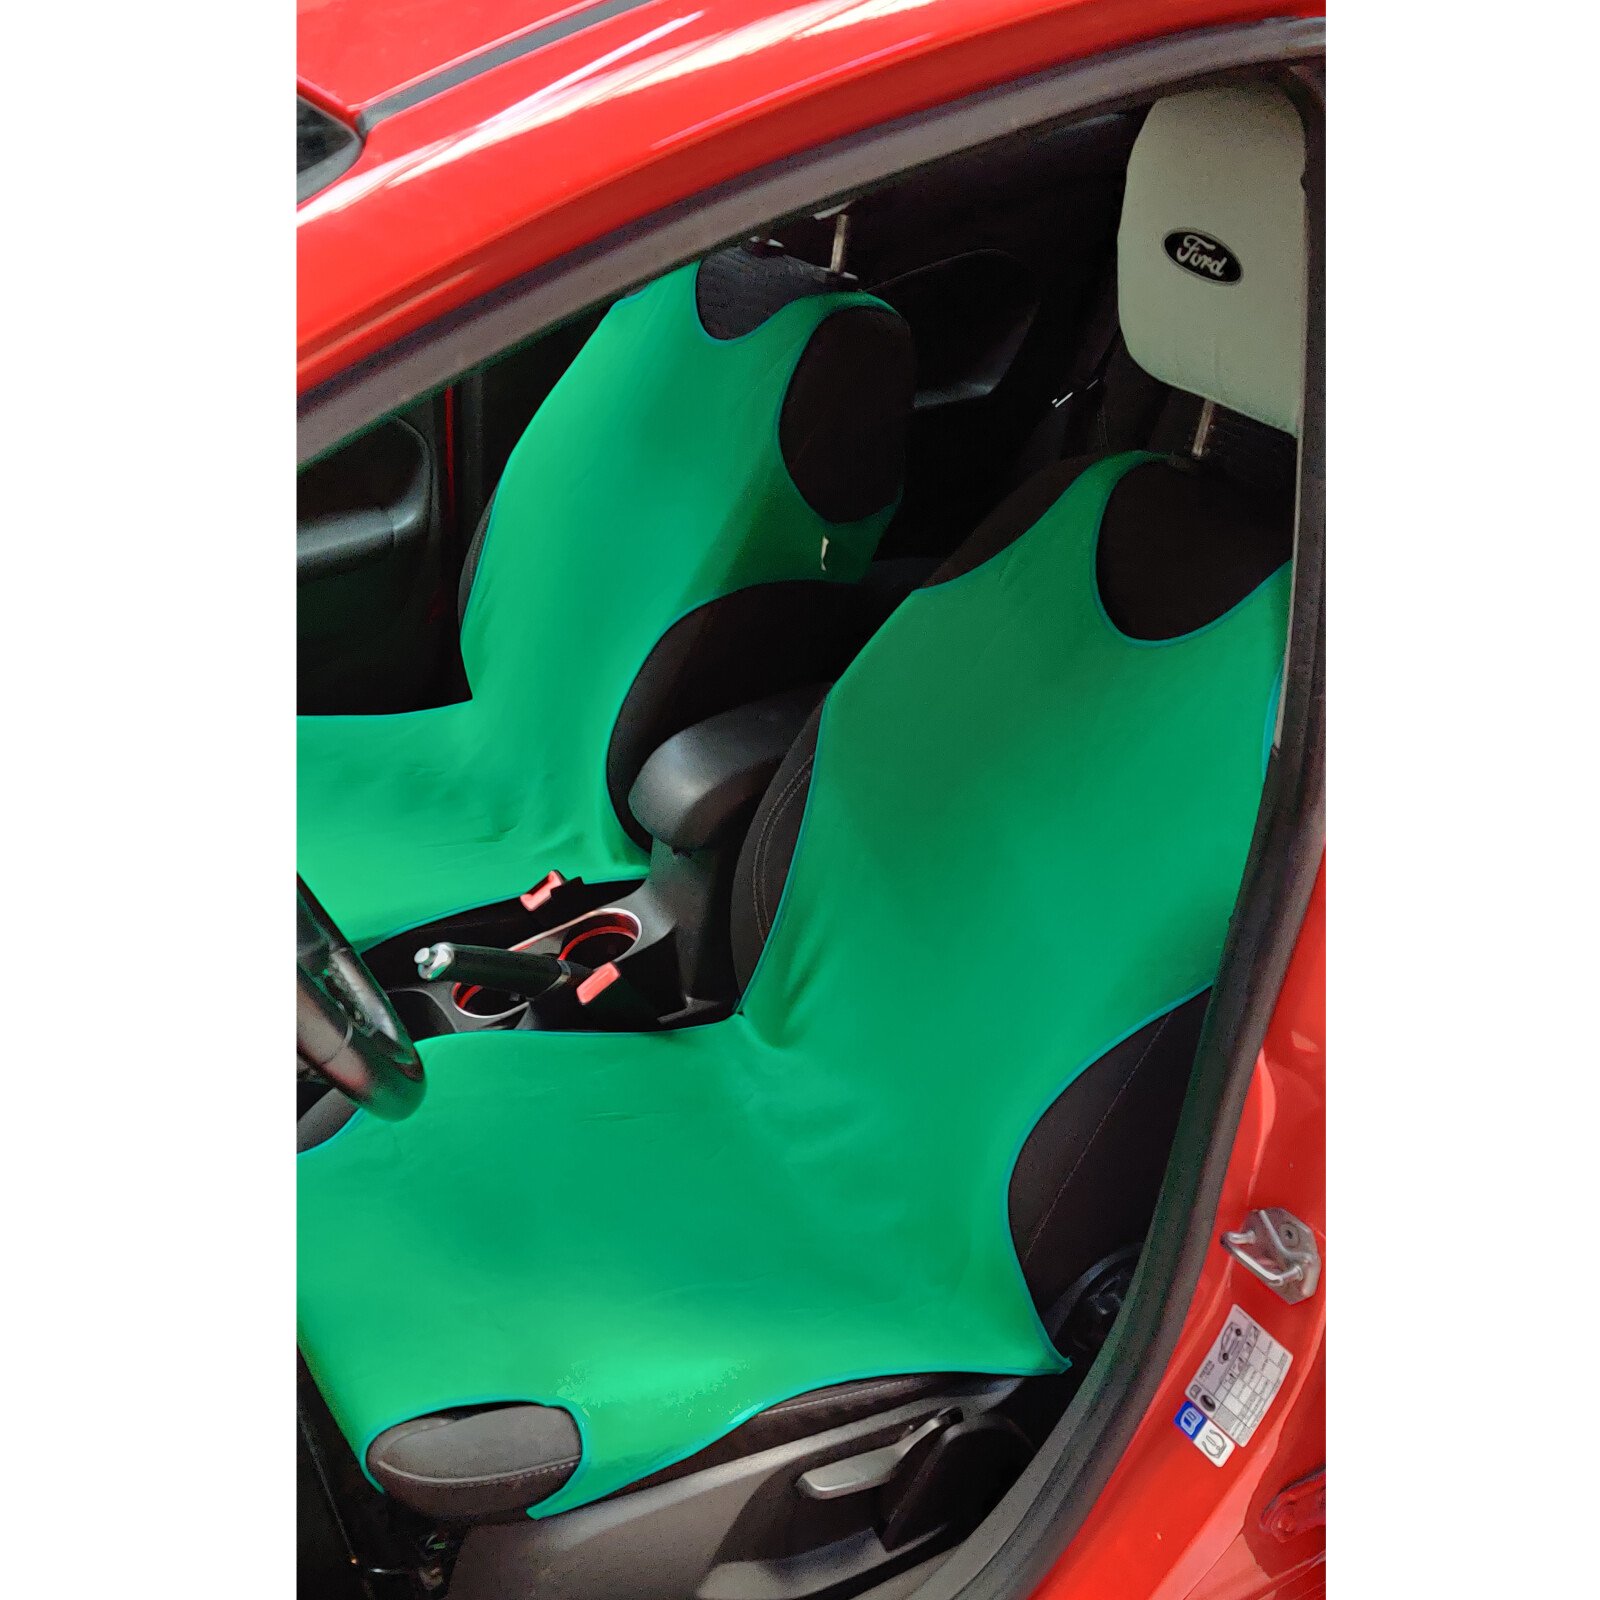 Cridem Sport T-shirt front seat covers 2pcs - Green thumb